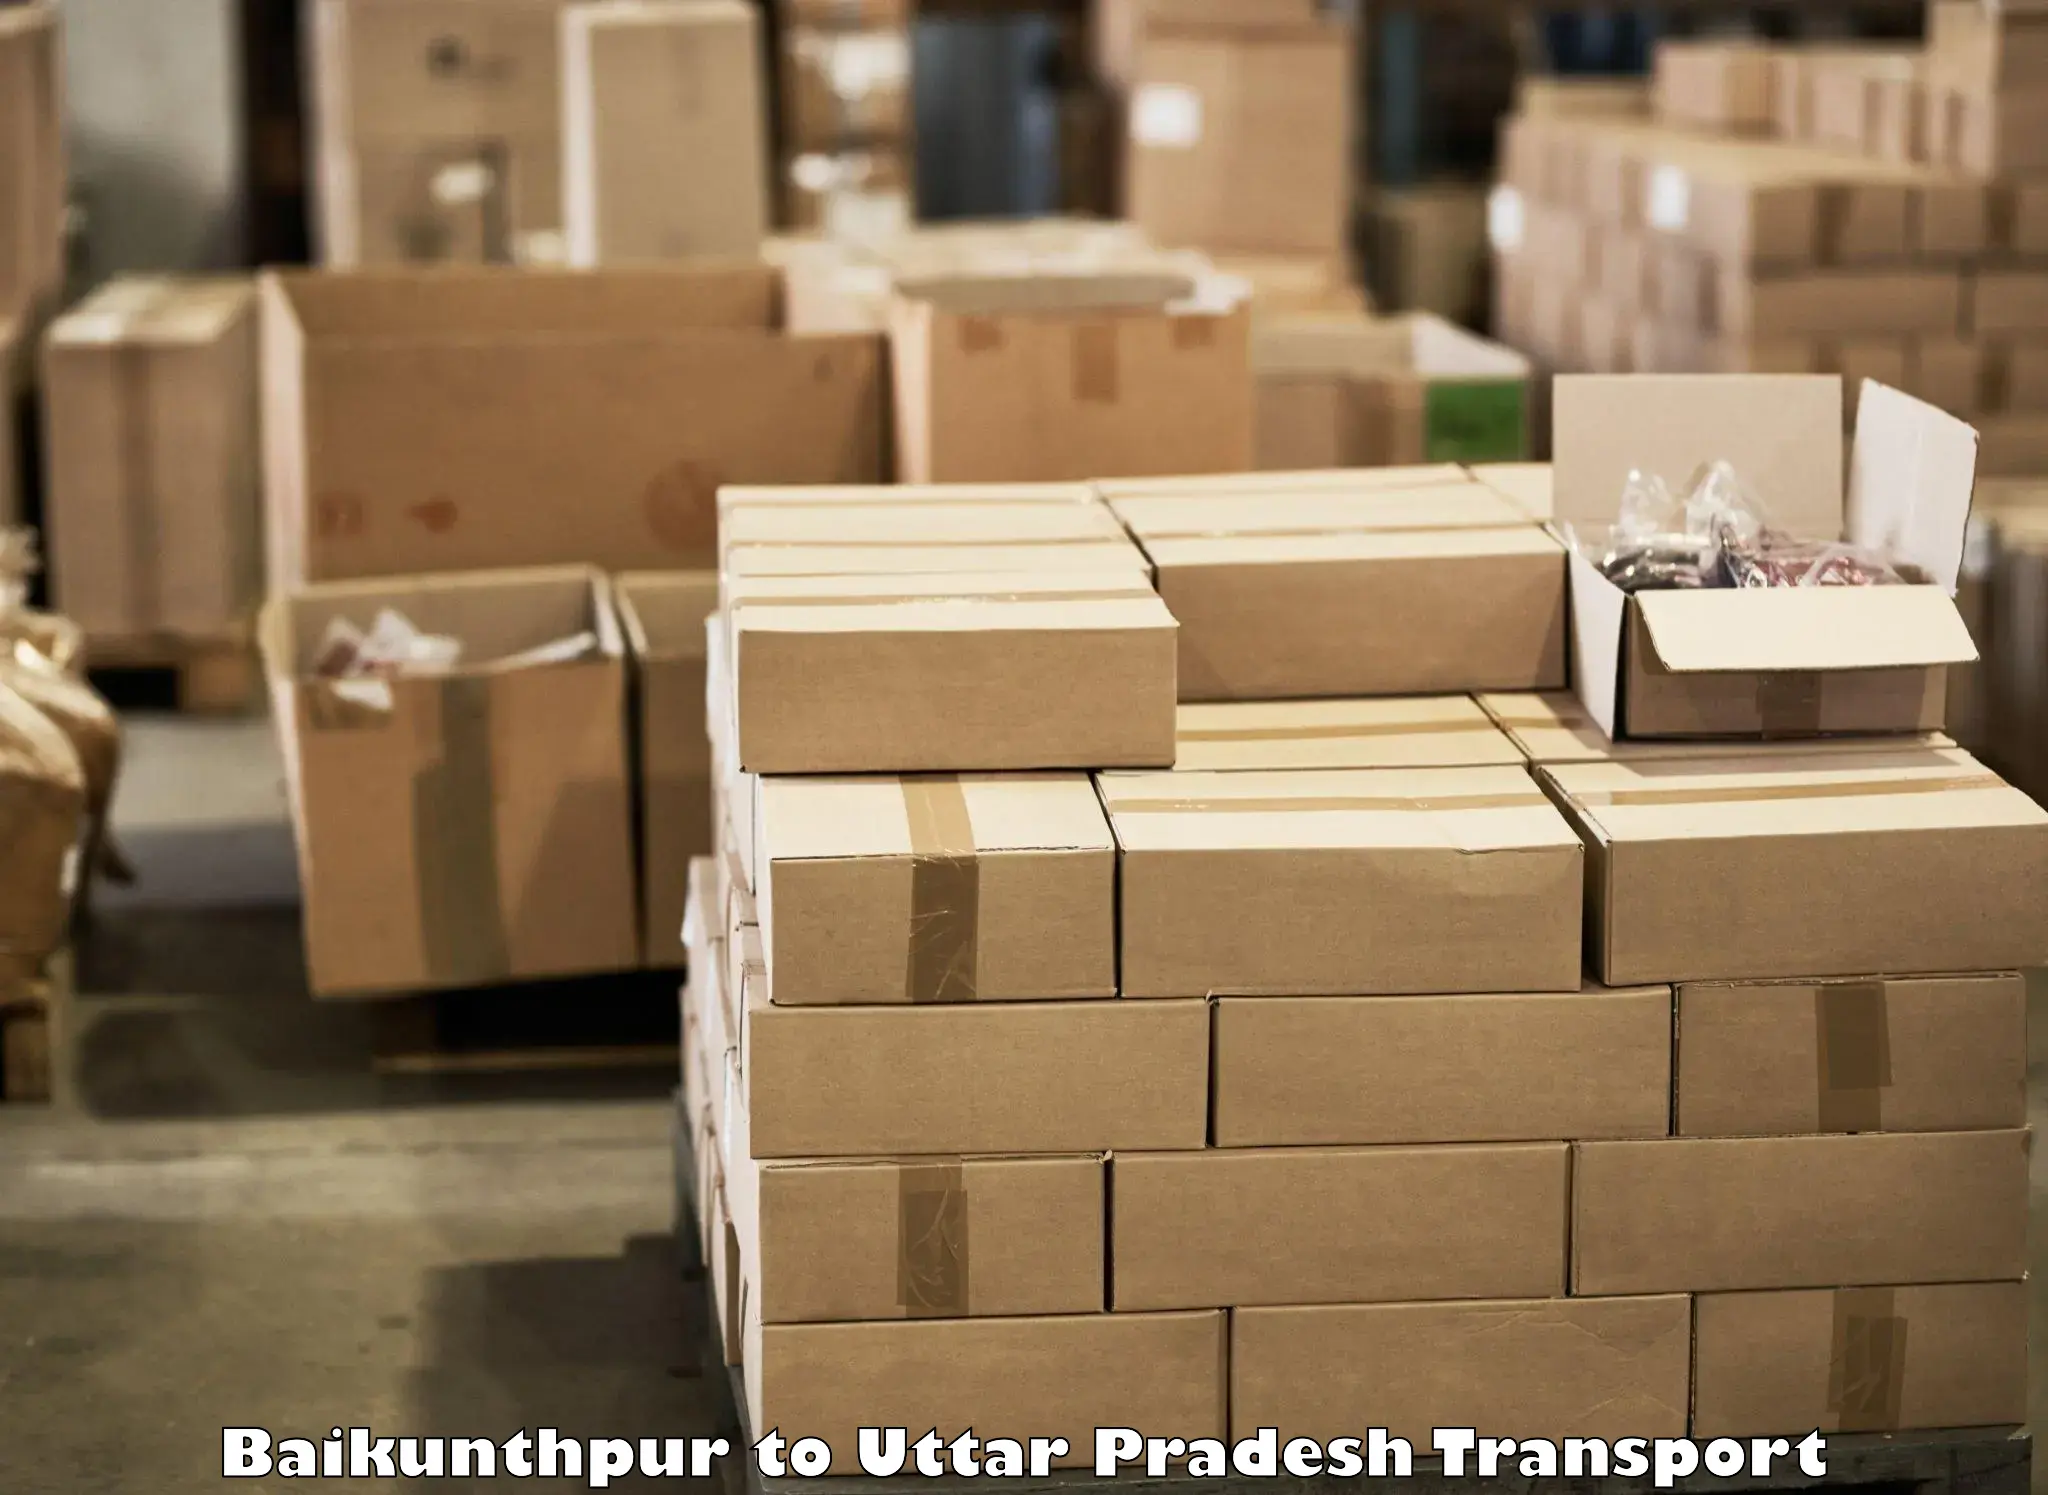 Daily parcel service transport Baikunthpur to Fatehabad Agra